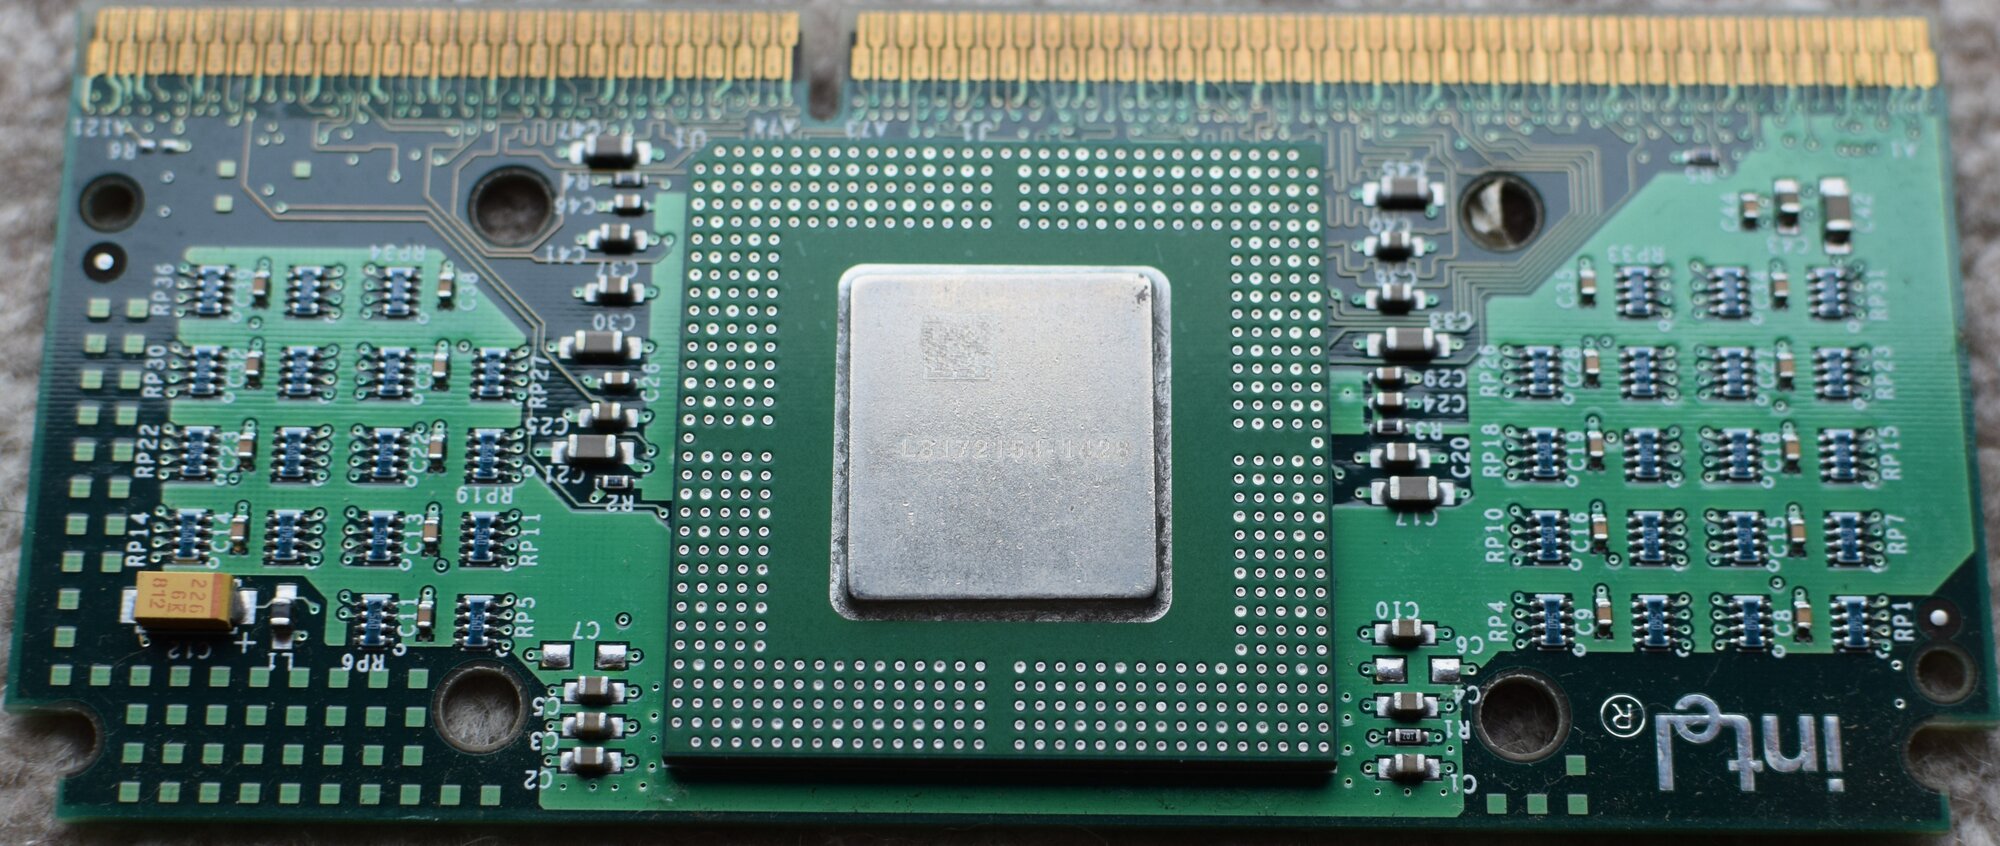 Intel slocket  soldered chip 266-66 front.JPG